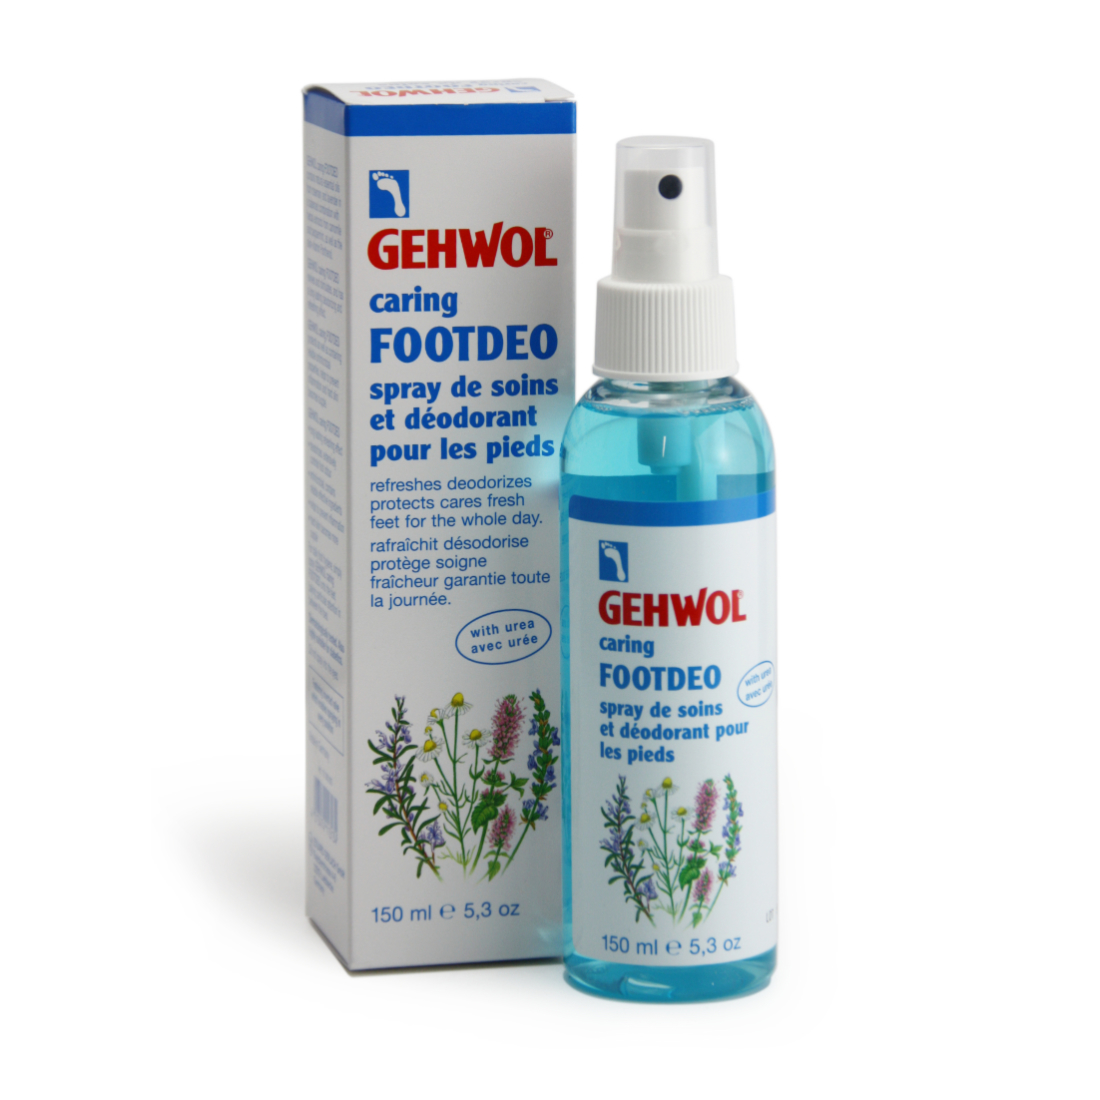 Gehwol FootDeo Foot Care Spray & Deodorant